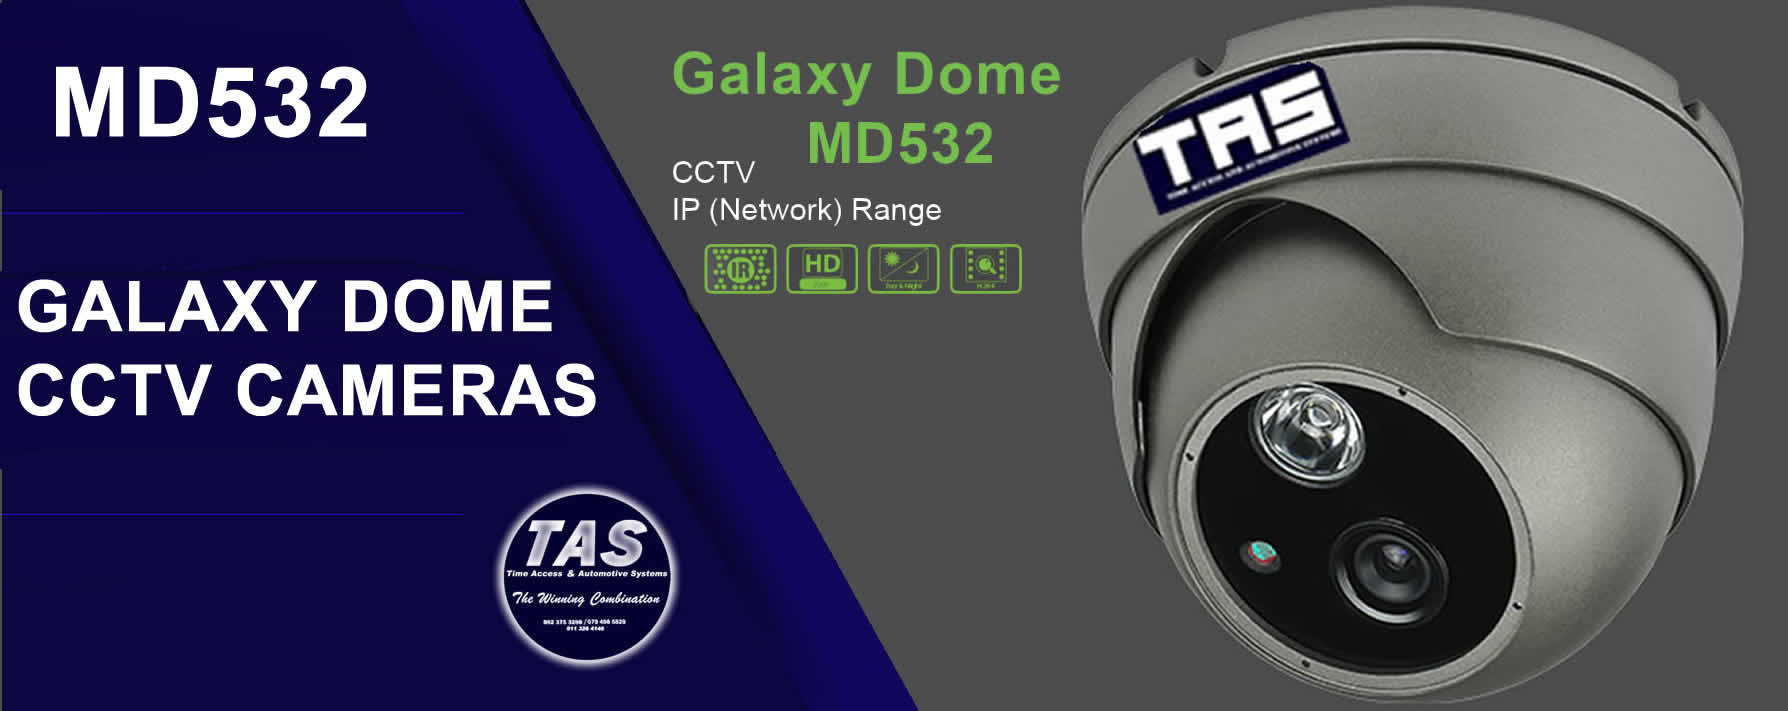 MD532 CCTV GALAXY dome Cameras-security control banner